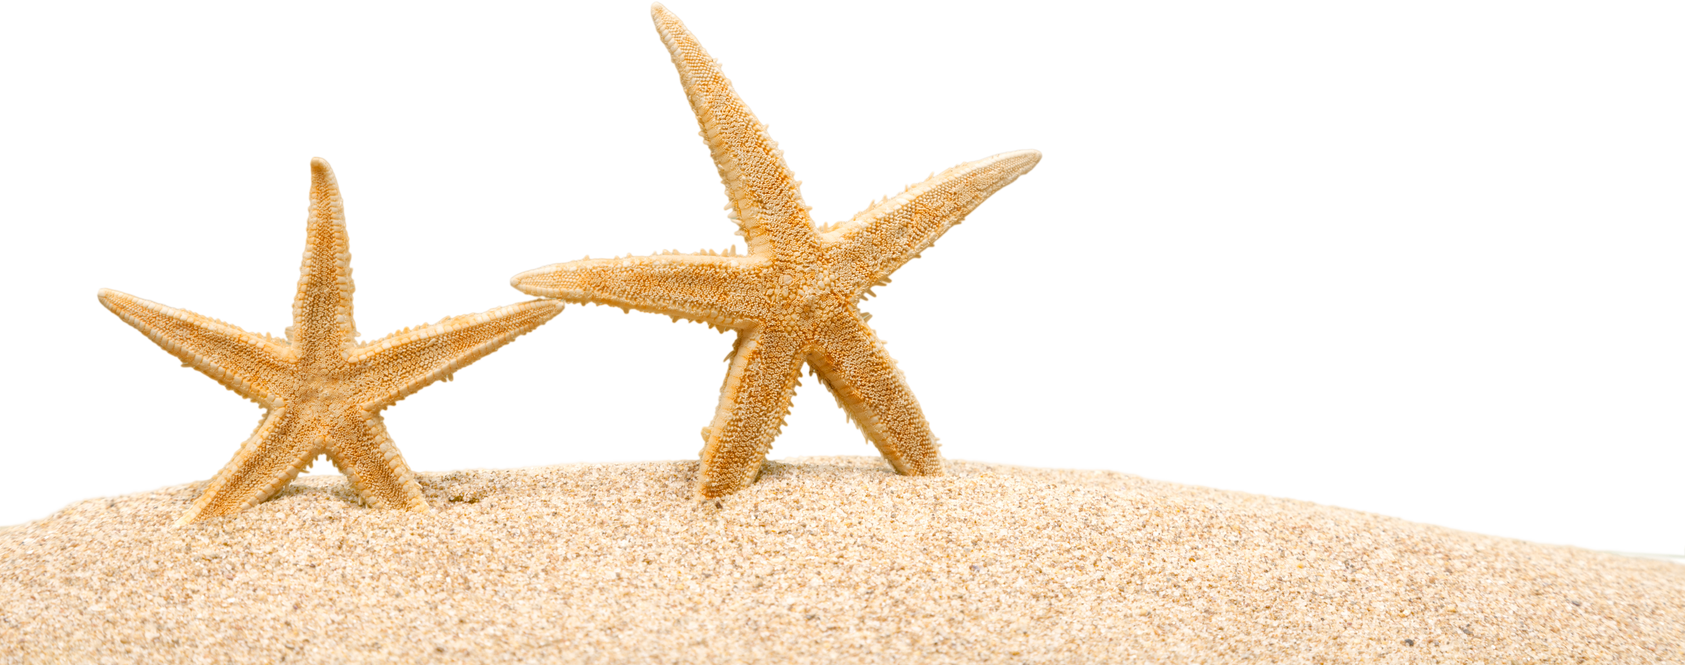 Starfish on Beach Sand 